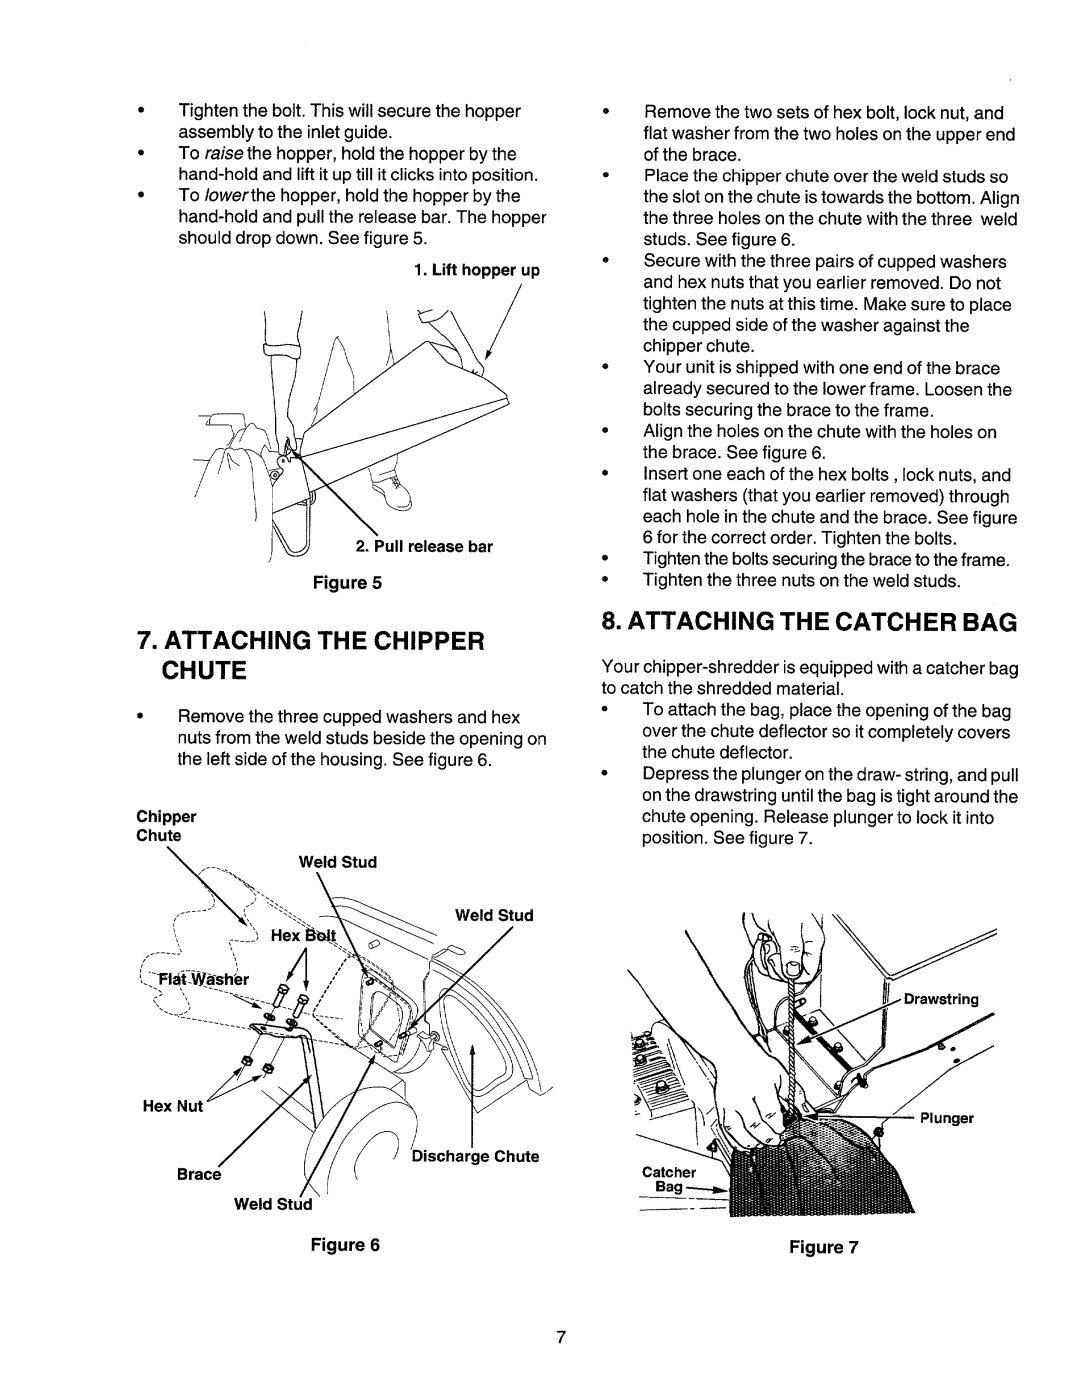 Craftsman 247.77586 manual Attaching The Chipper Chute, Attaching The Catcher Bag, Lift hopper up, Pull release bar Figure 